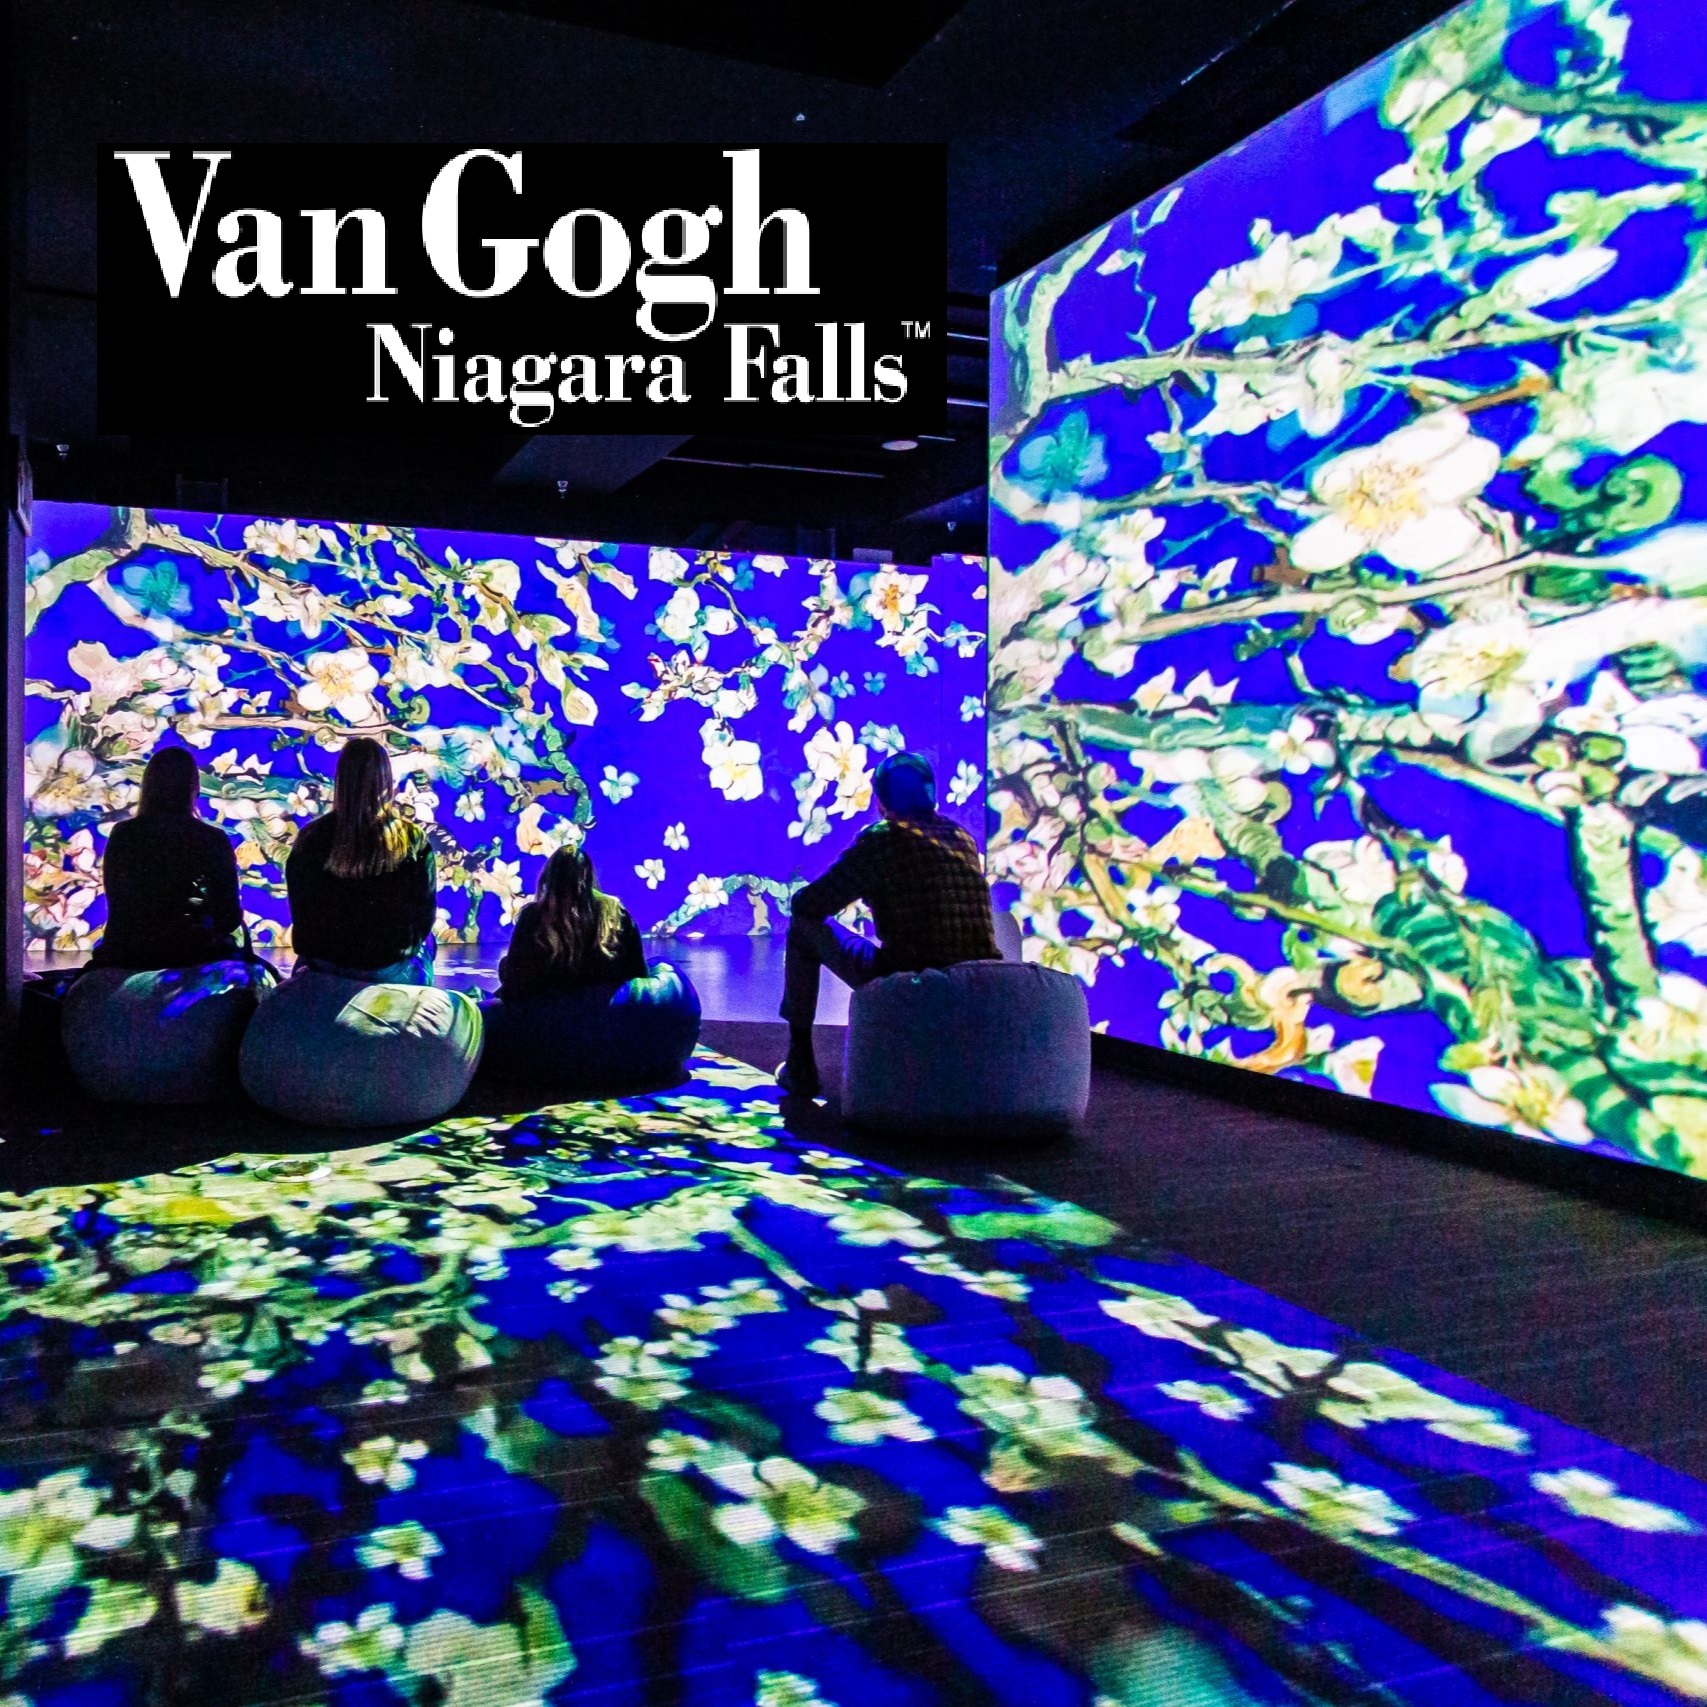 Van Gogh Niagara Falls Hotel Packages - fallsinfo